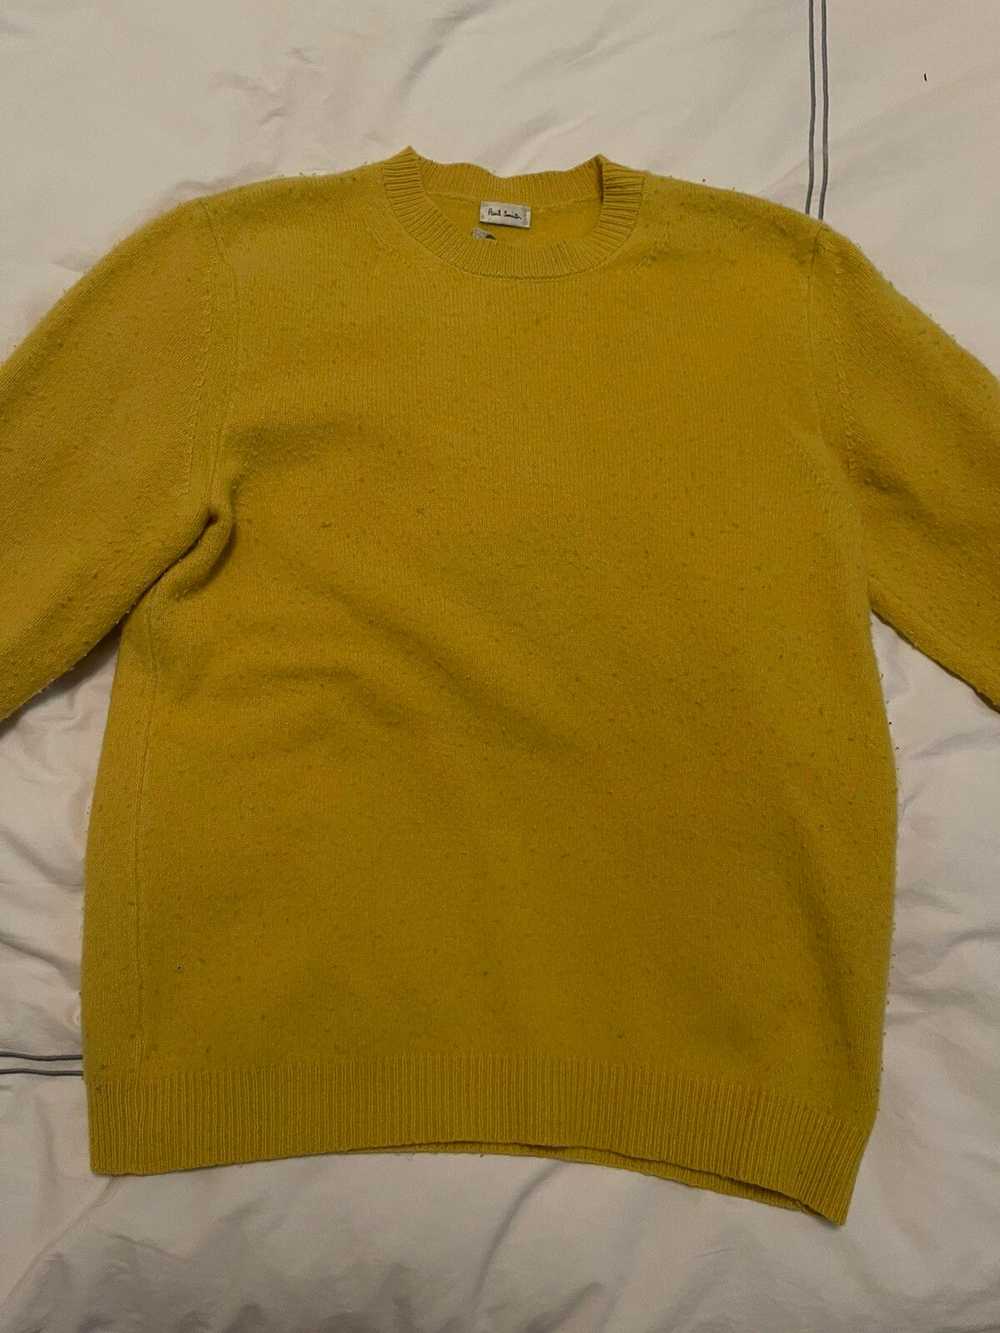 Paul Smith Yellow Lambswool Sweater - image 1